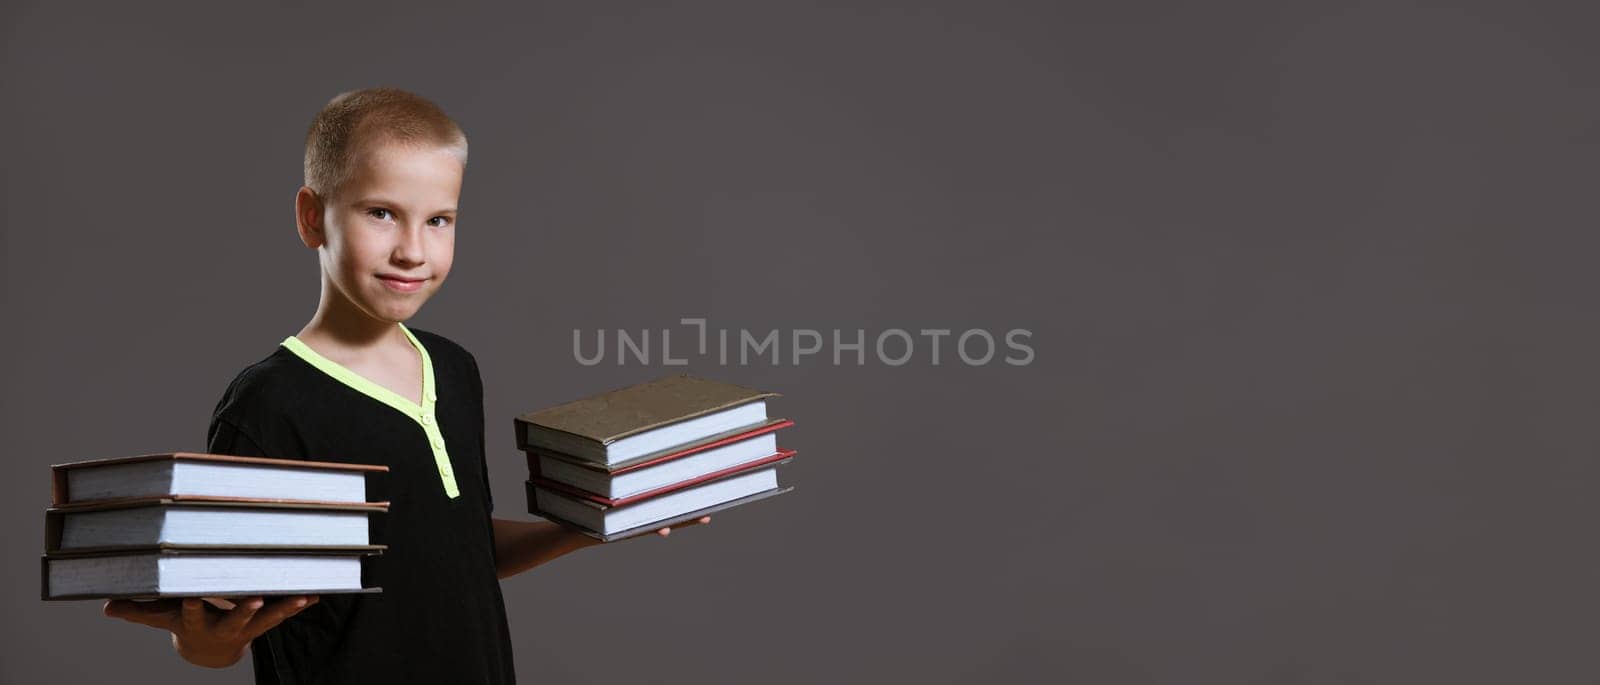 Cute boy holding stacks of books on gray background by EkaterinaPereslavtseva